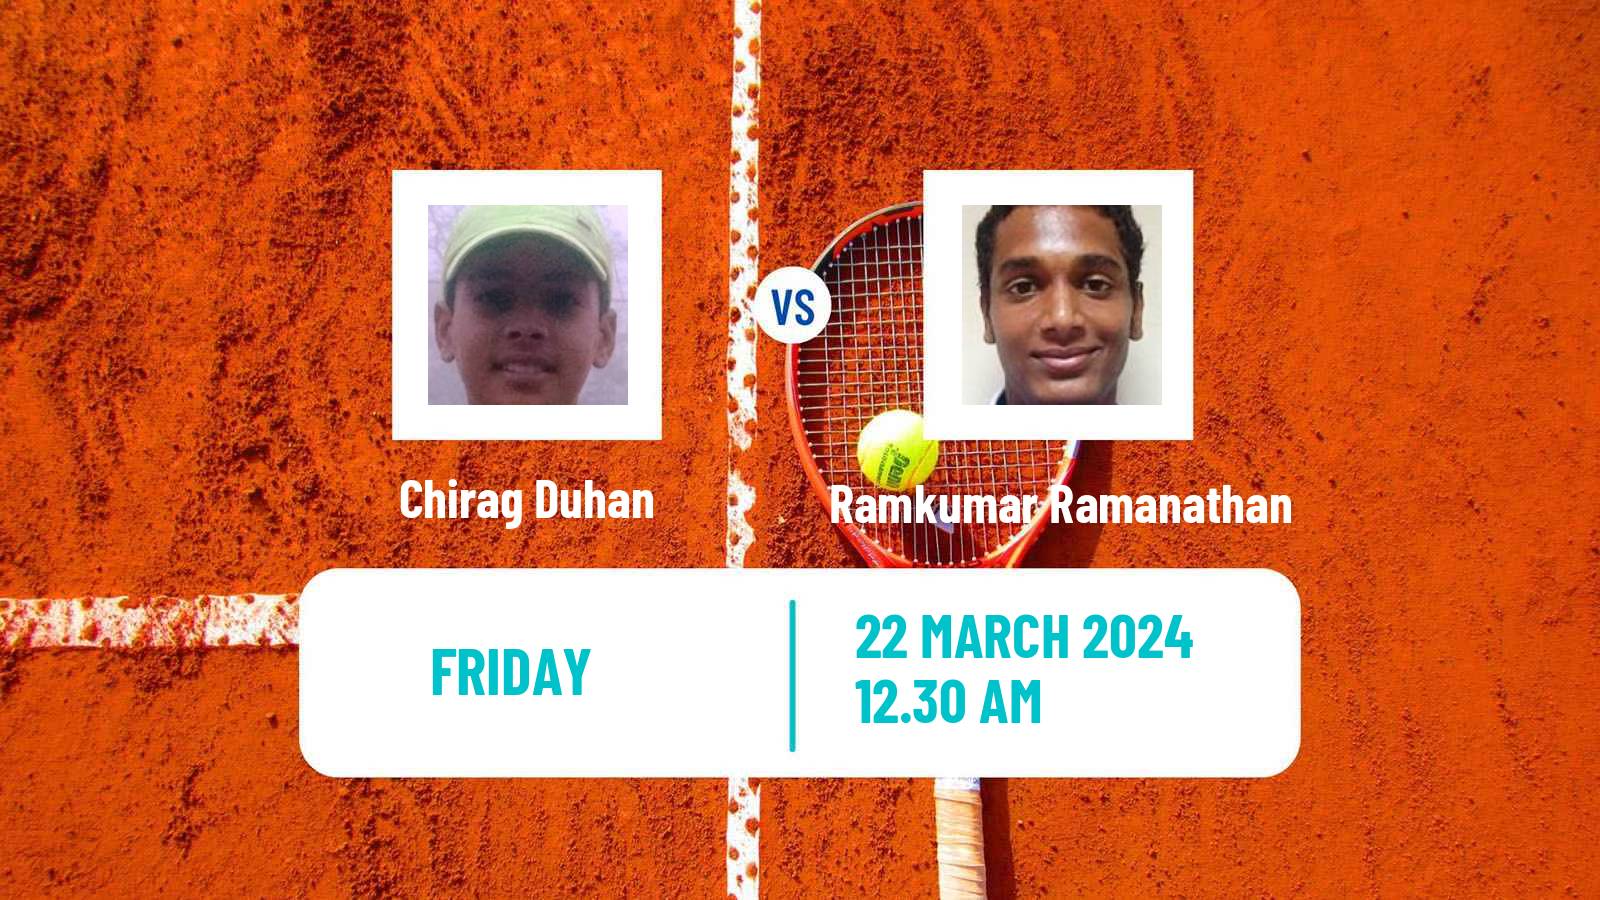 Tennis ITF M15 Chandigarh Men Chirag Duhan - Ramkumar Ramanathan